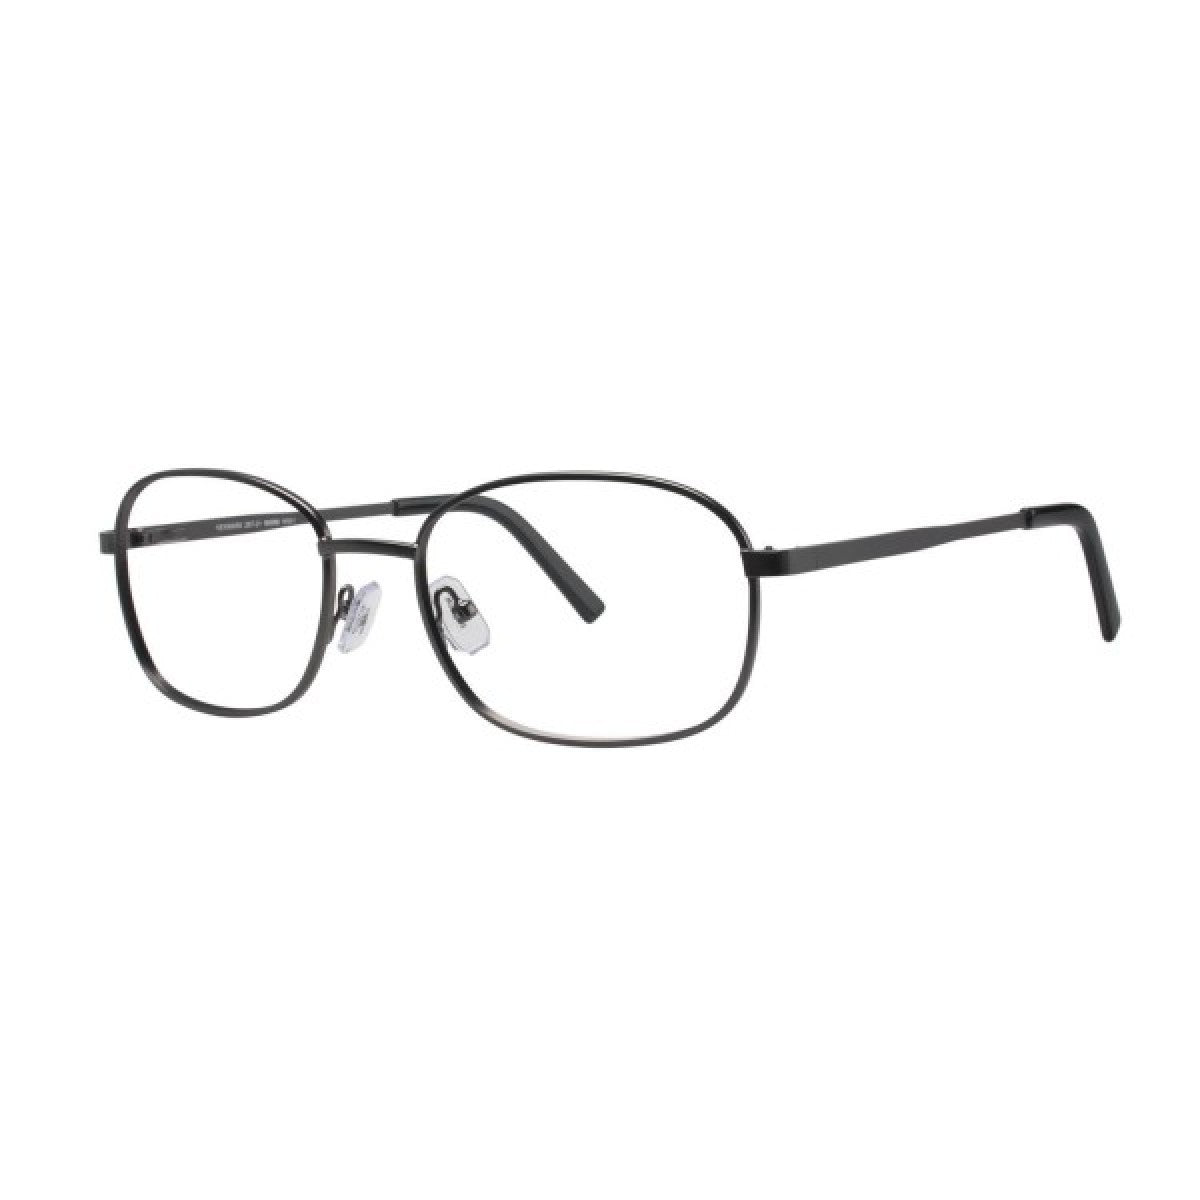 Wolverine Safety Eyewear Eyeglasses W041 Side Shields - Go-Readers.com